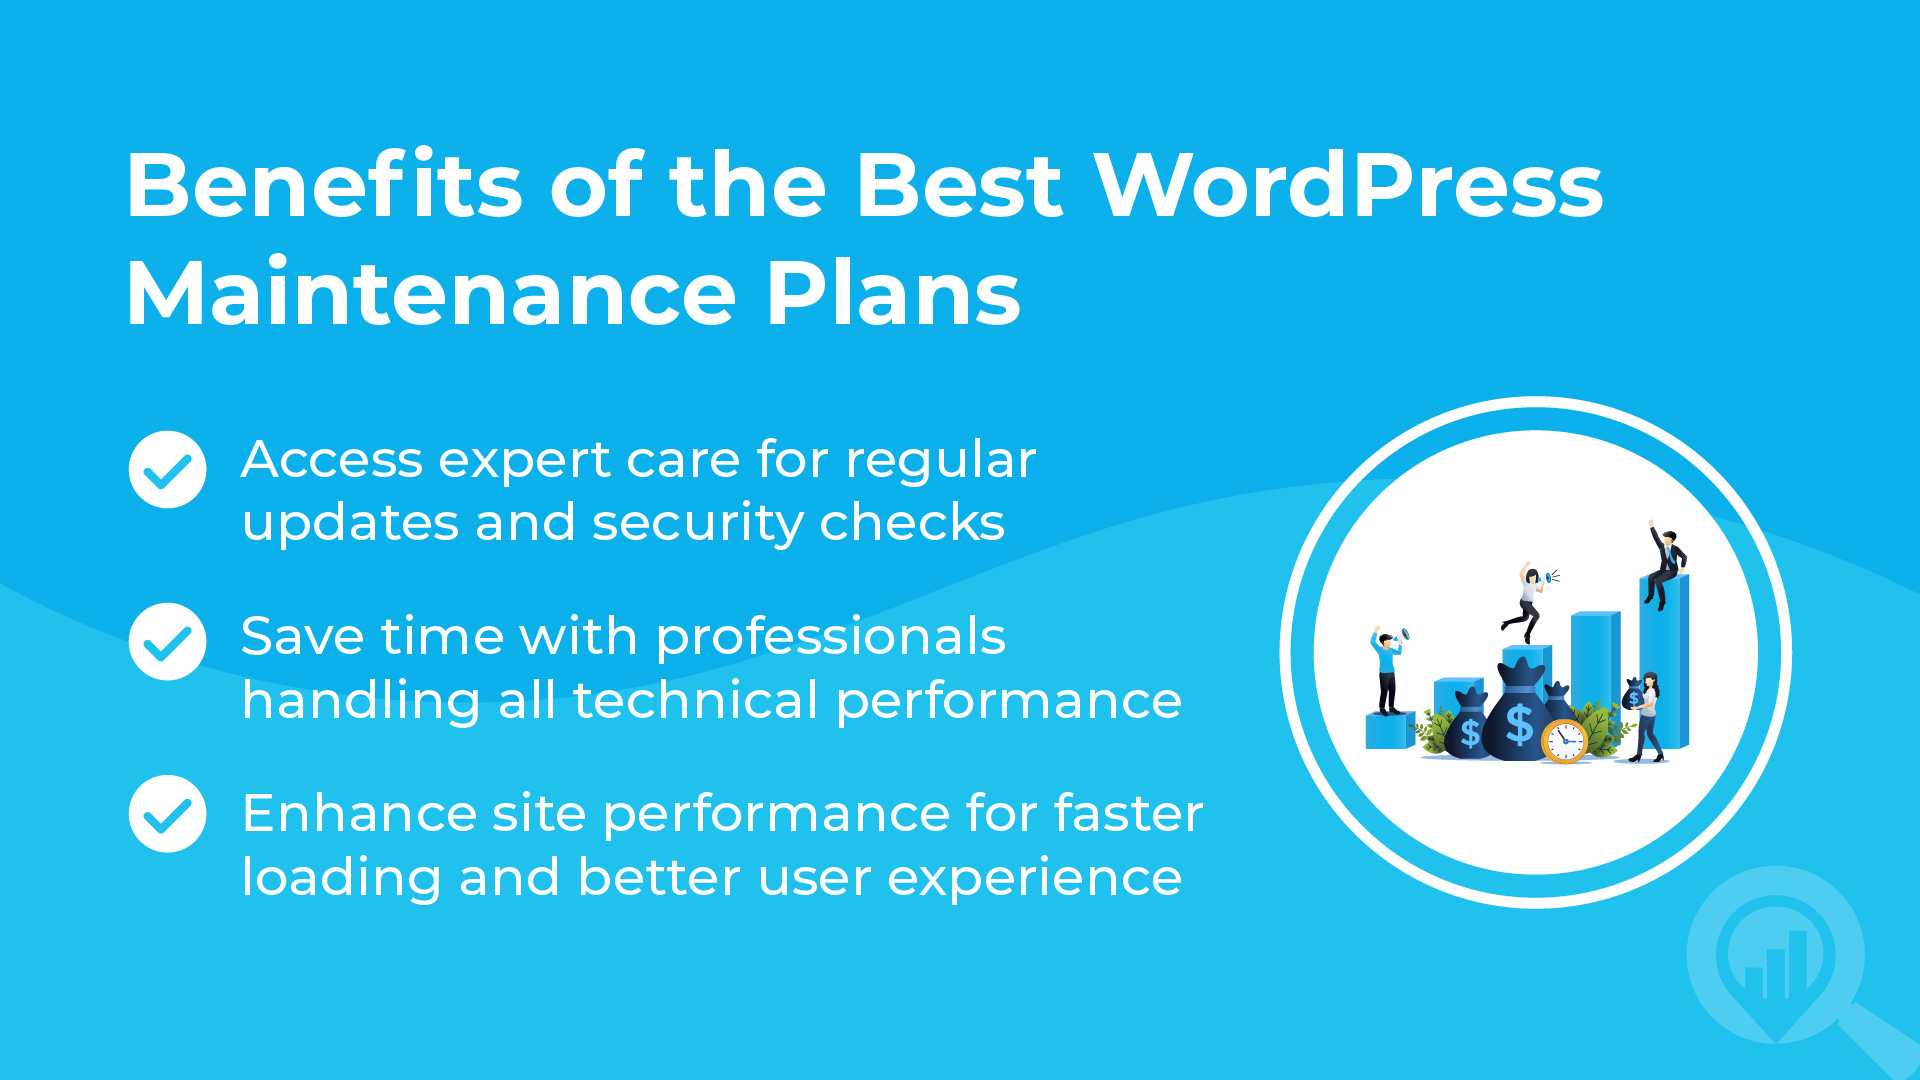 Benefits of the Best WordPress Maintenance Plans